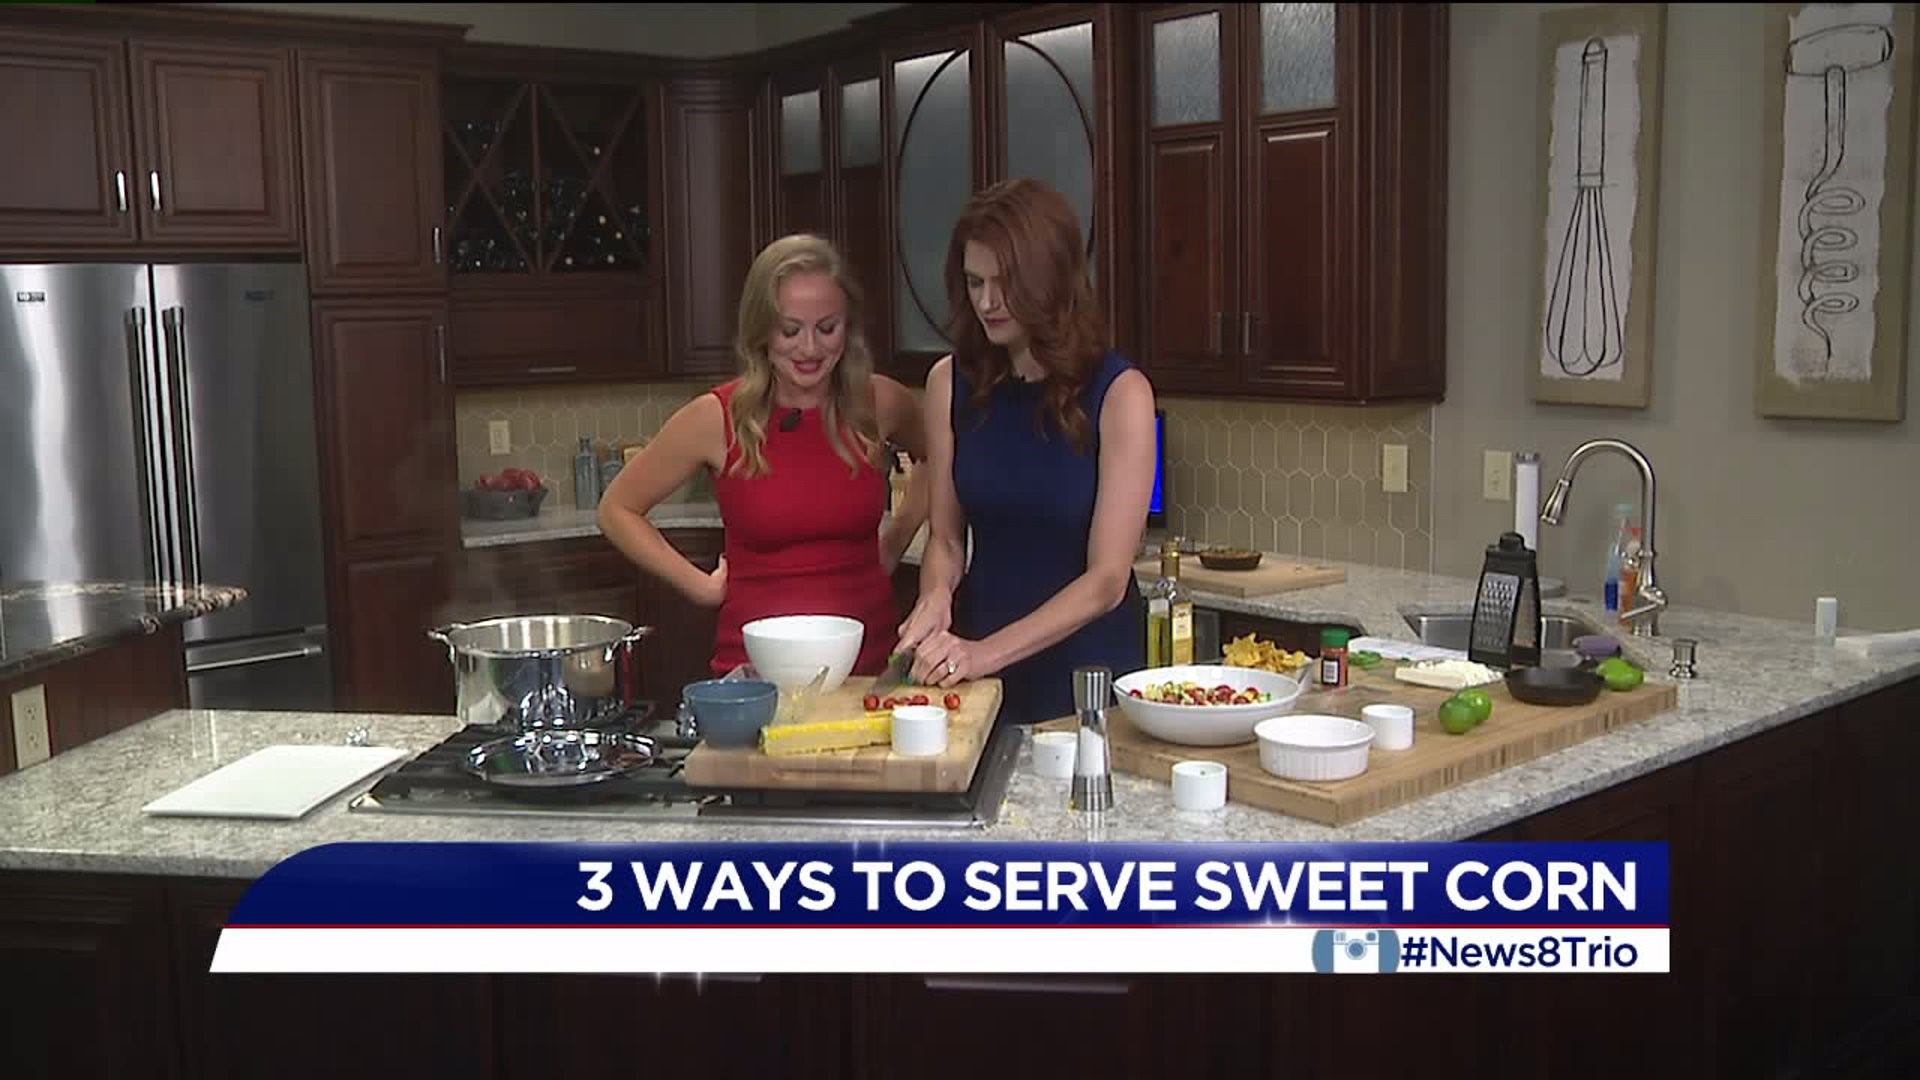 NEWS 8 TRIO: 3 ways to serve sweet corn pt. 1